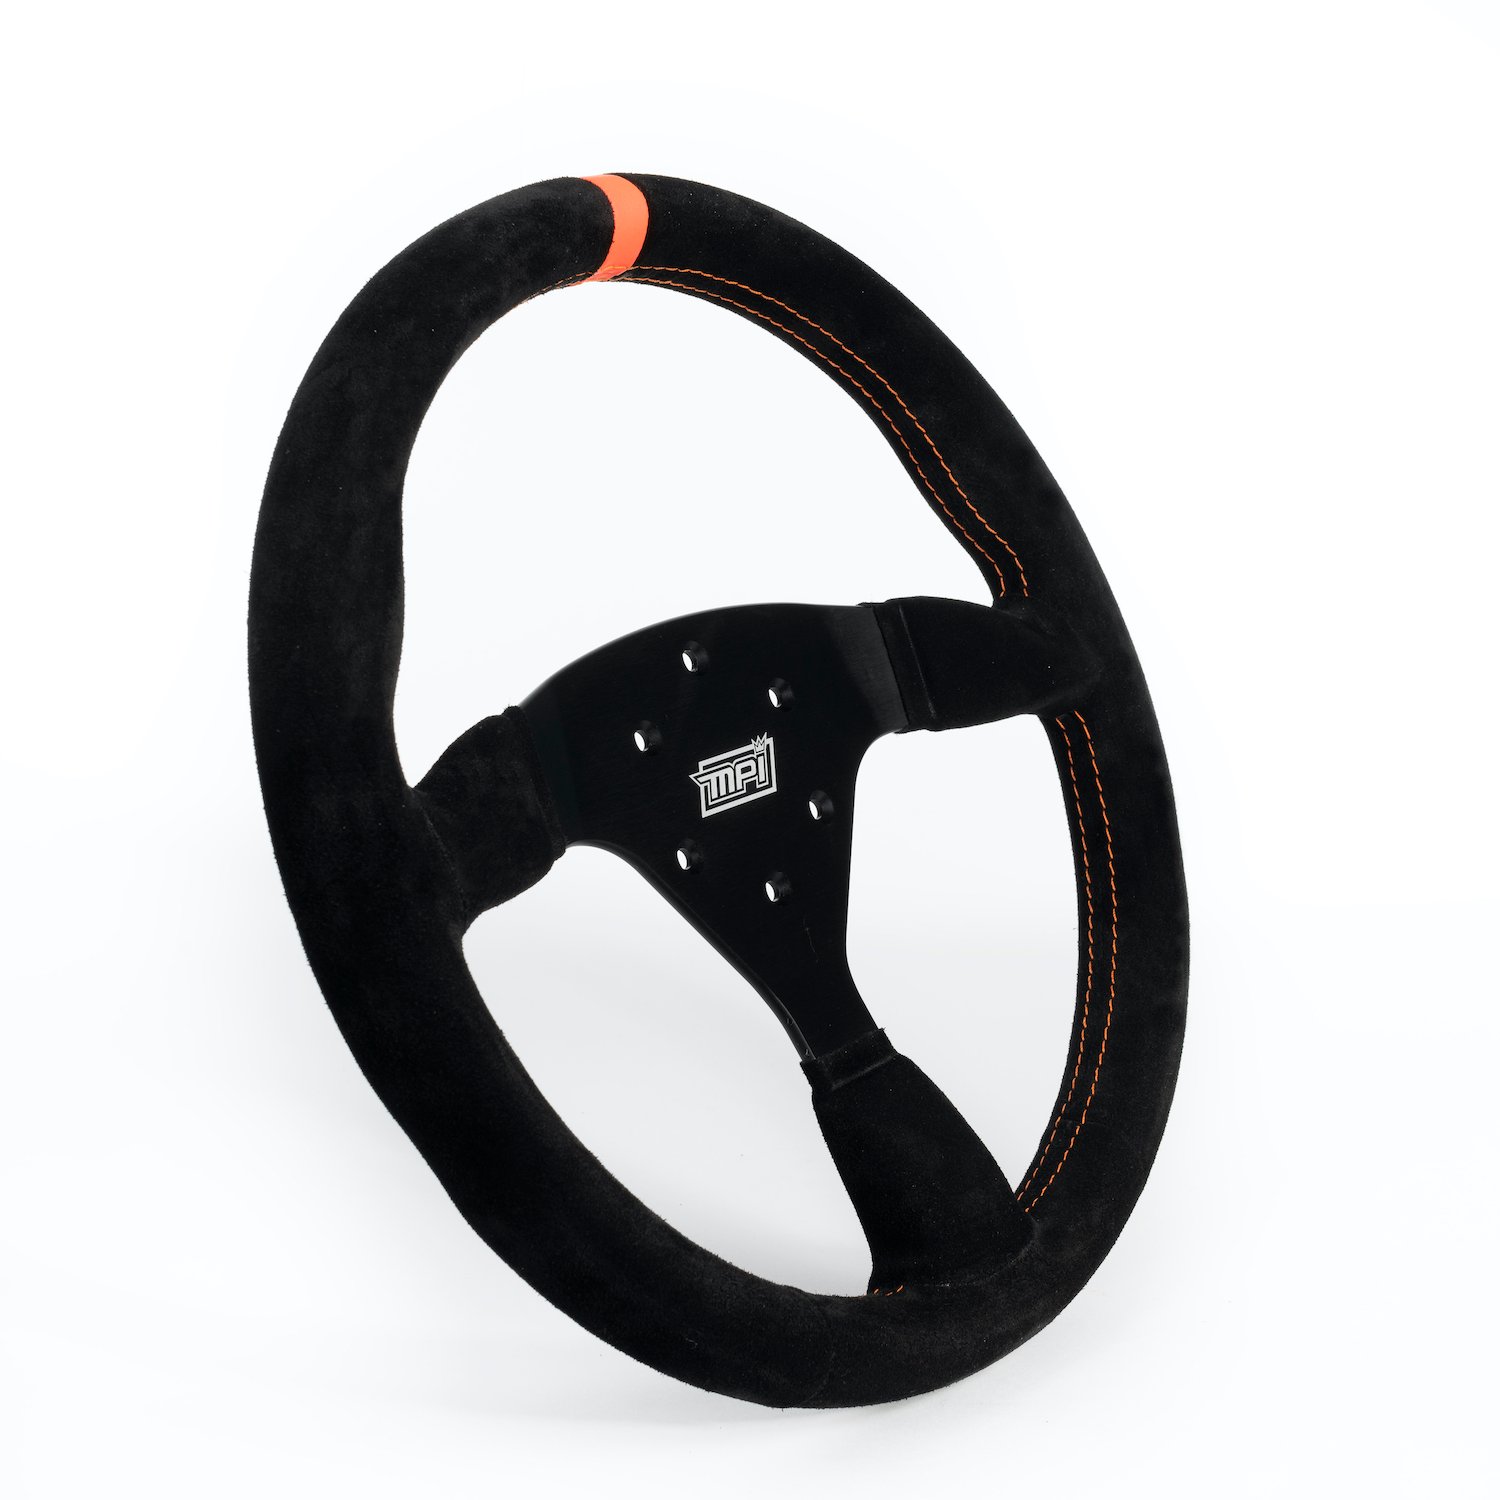 Road Course / Track Day Steering Wheel 14 in. Diameter